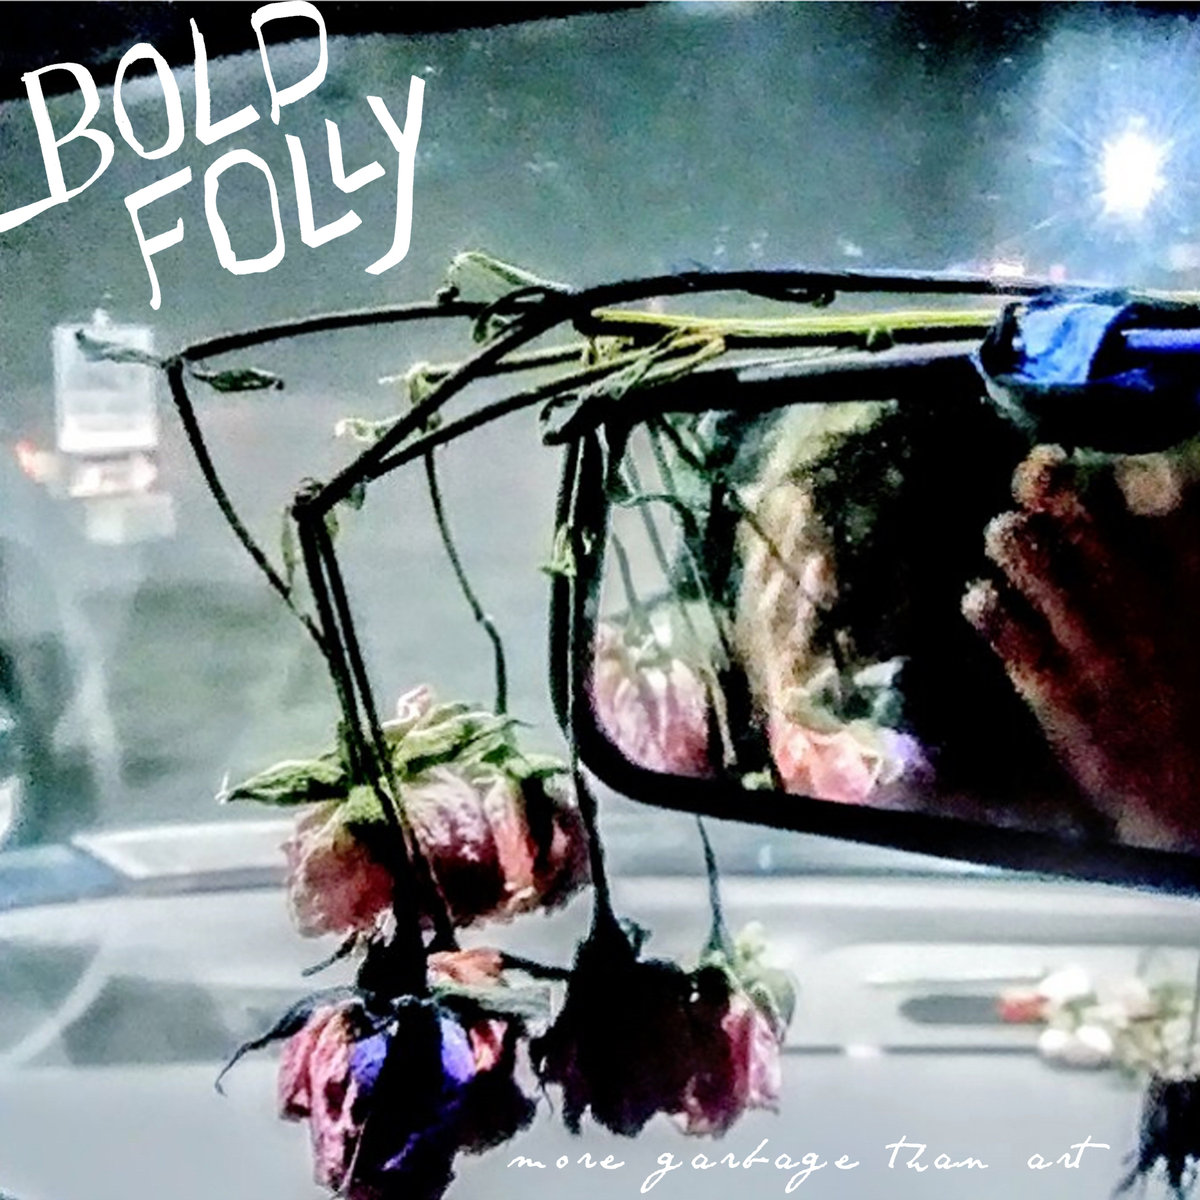 Bold Folly –More Garbage Than Art